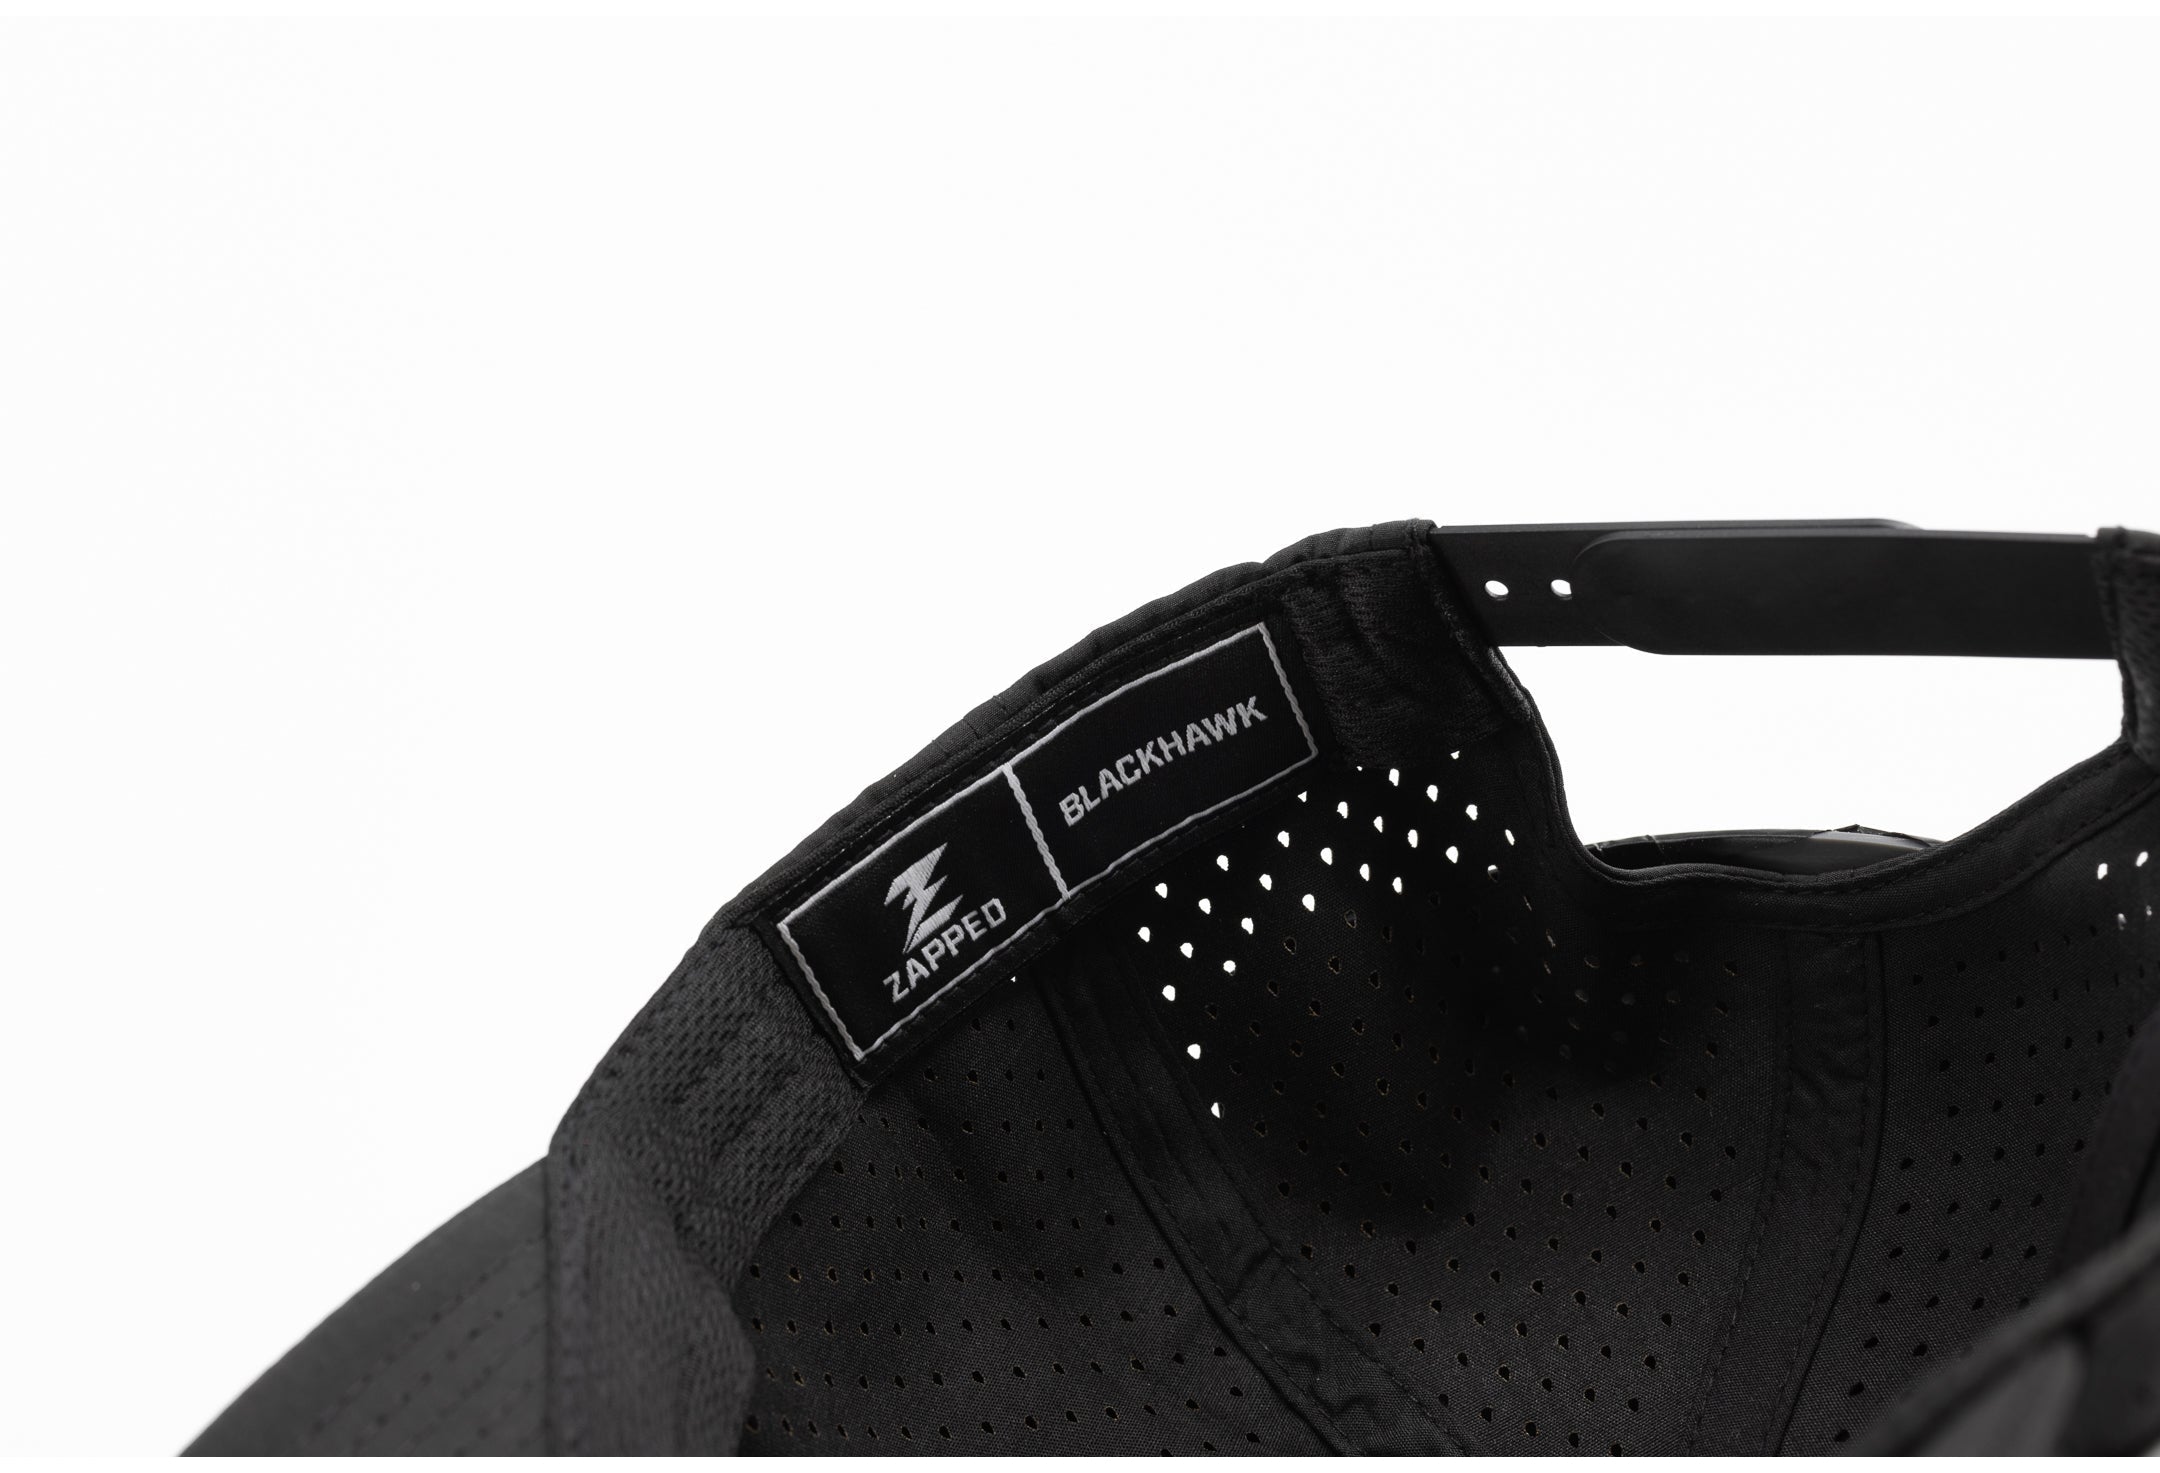 BLACKHAWK Blank-Water Repellent hat-Zapped Headwear-Black Camo/Black-Zapped Headwear